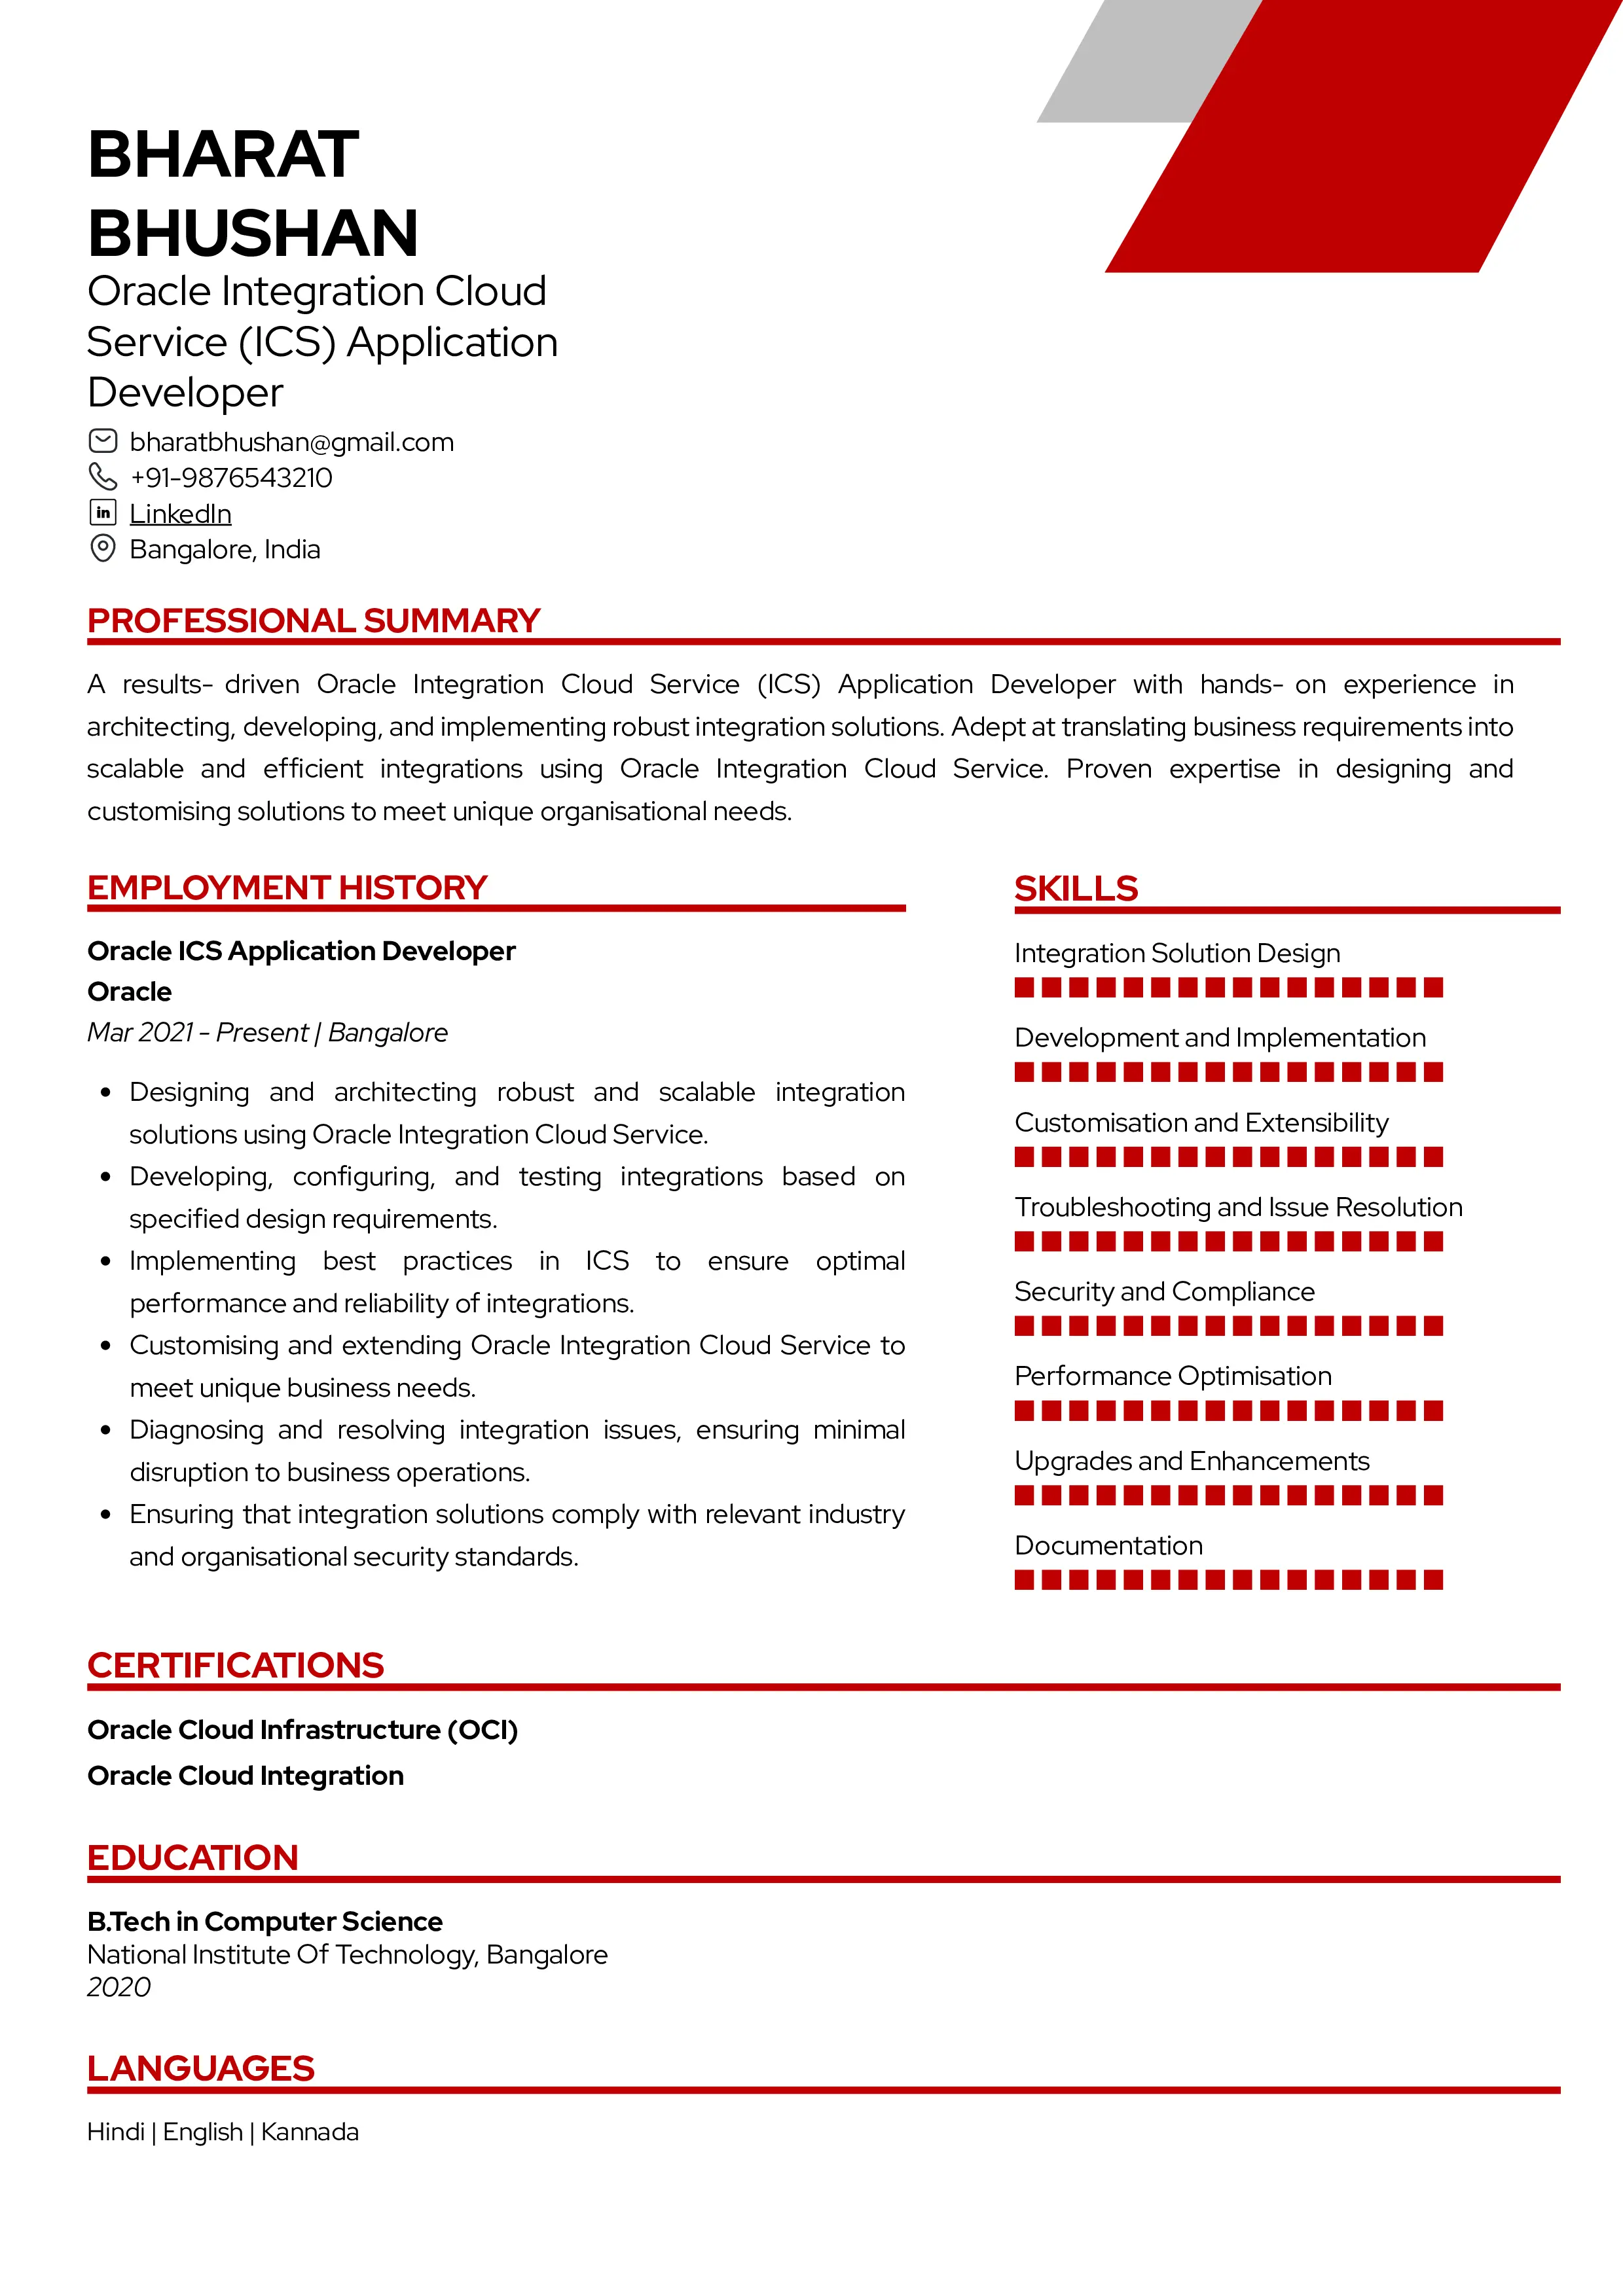 Sample Resume of Oracle Integration Cloud Service (ICS) Application Developer | Free Resume Templates & Samples on Resumod.co